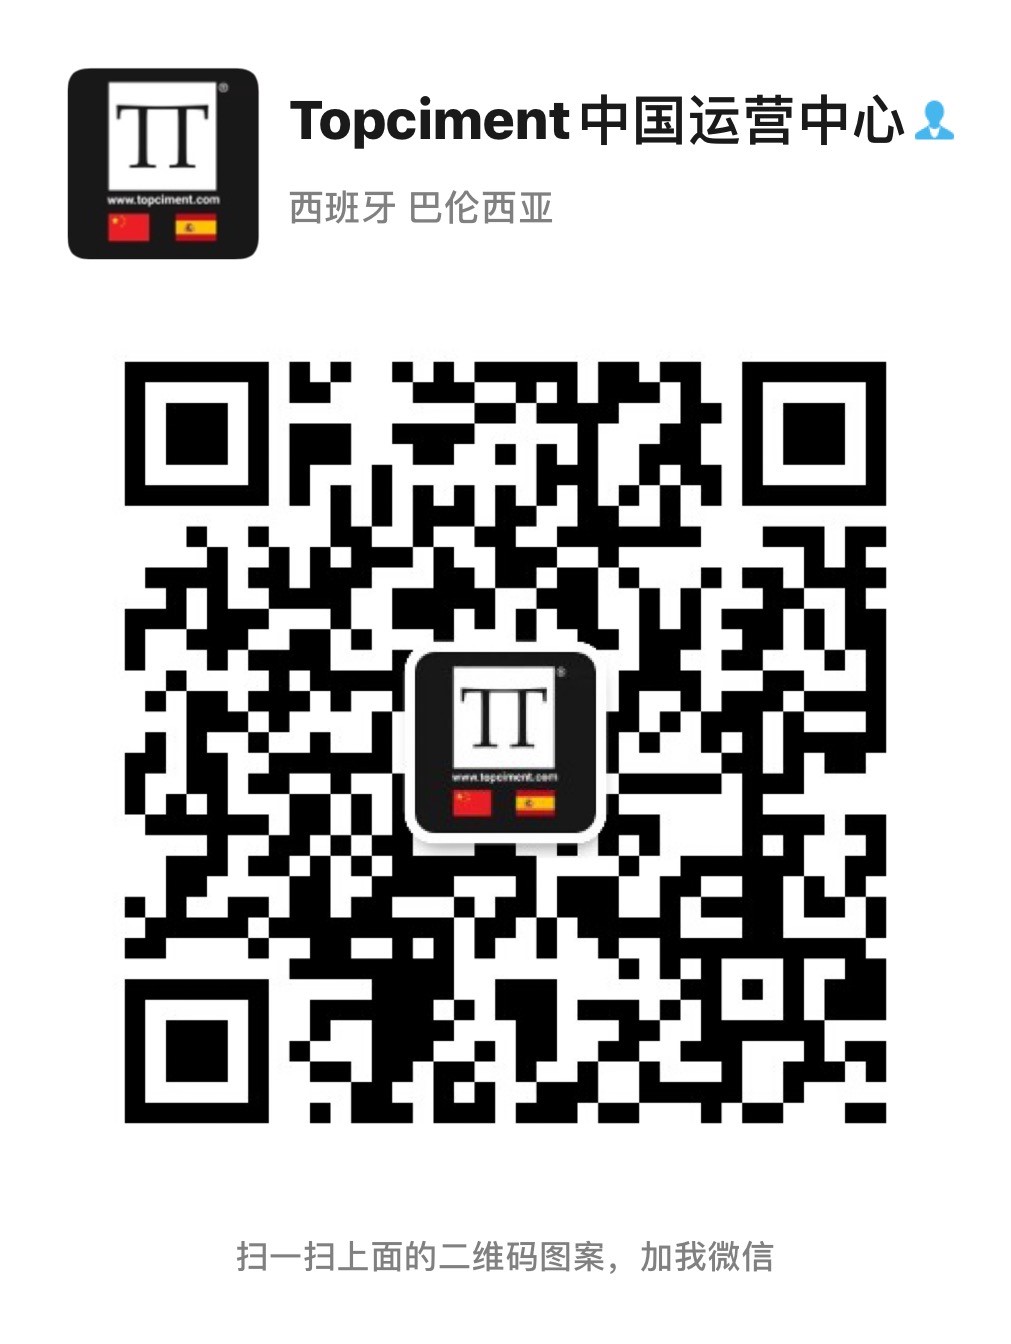 Topciment QR code WeChat